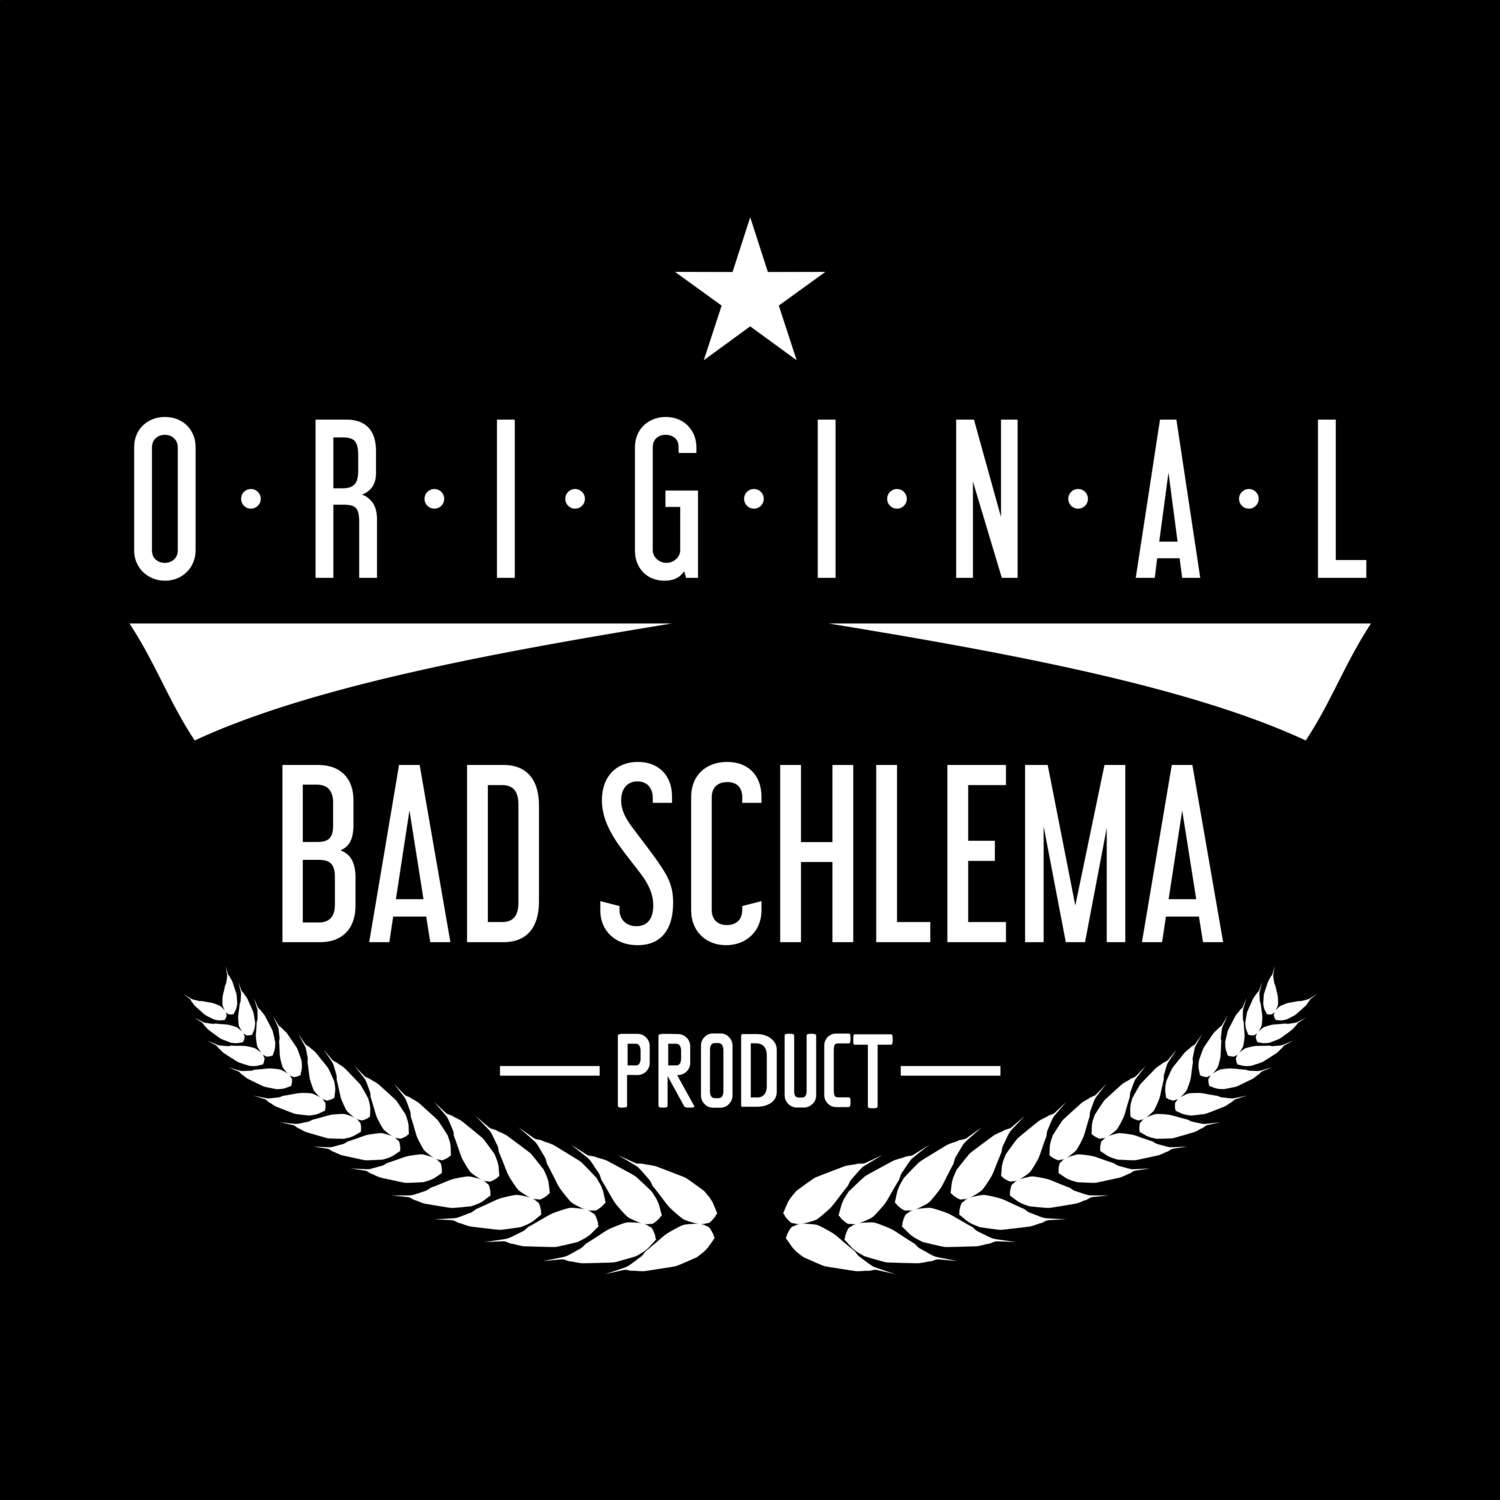 Bad Schlema T-Shirt »Original Product«